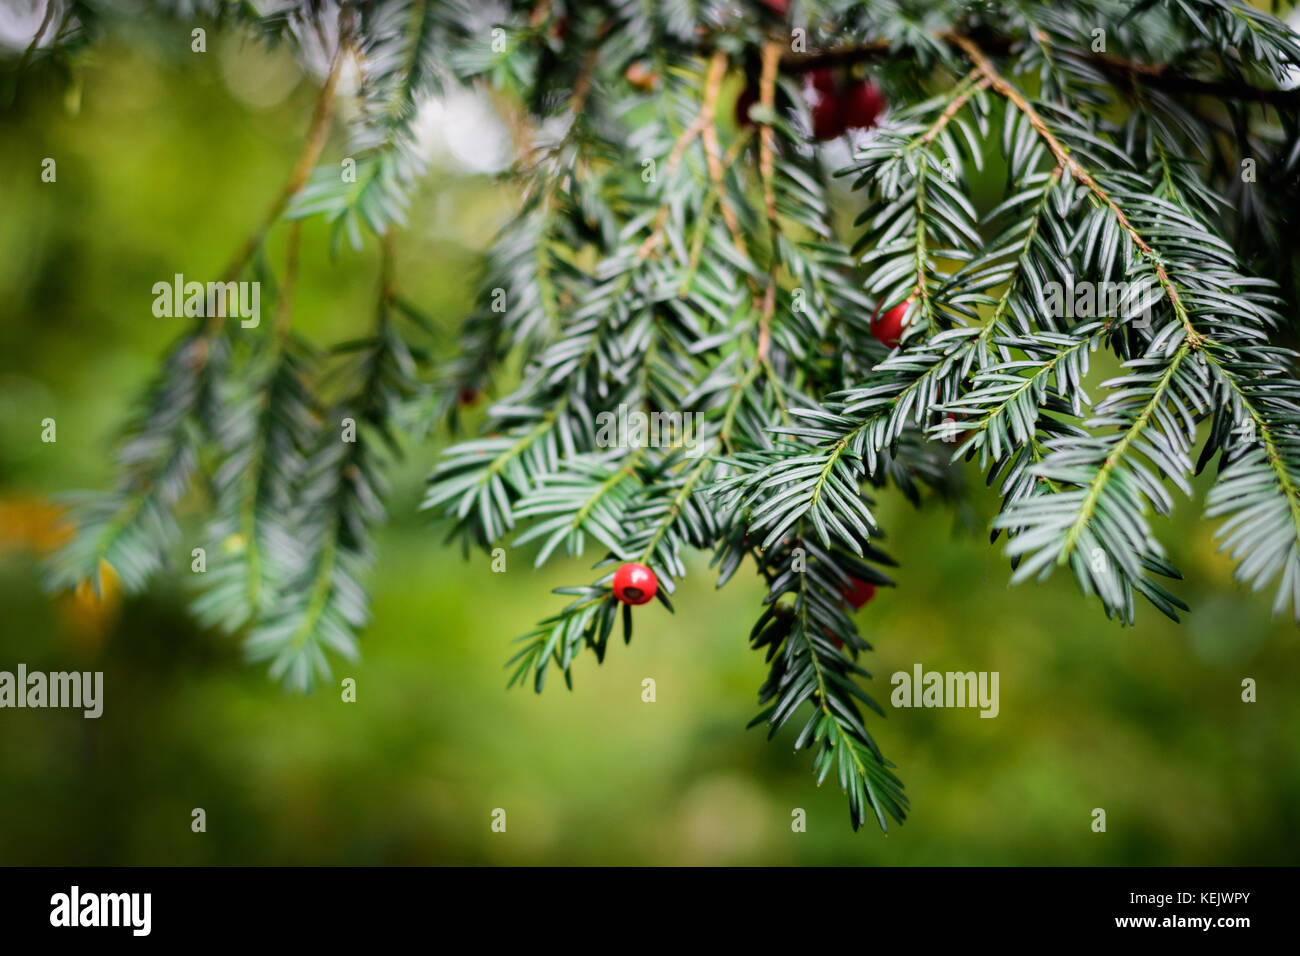 Red berries growing on pine tree Stock Photo: 163913875 - Alamy